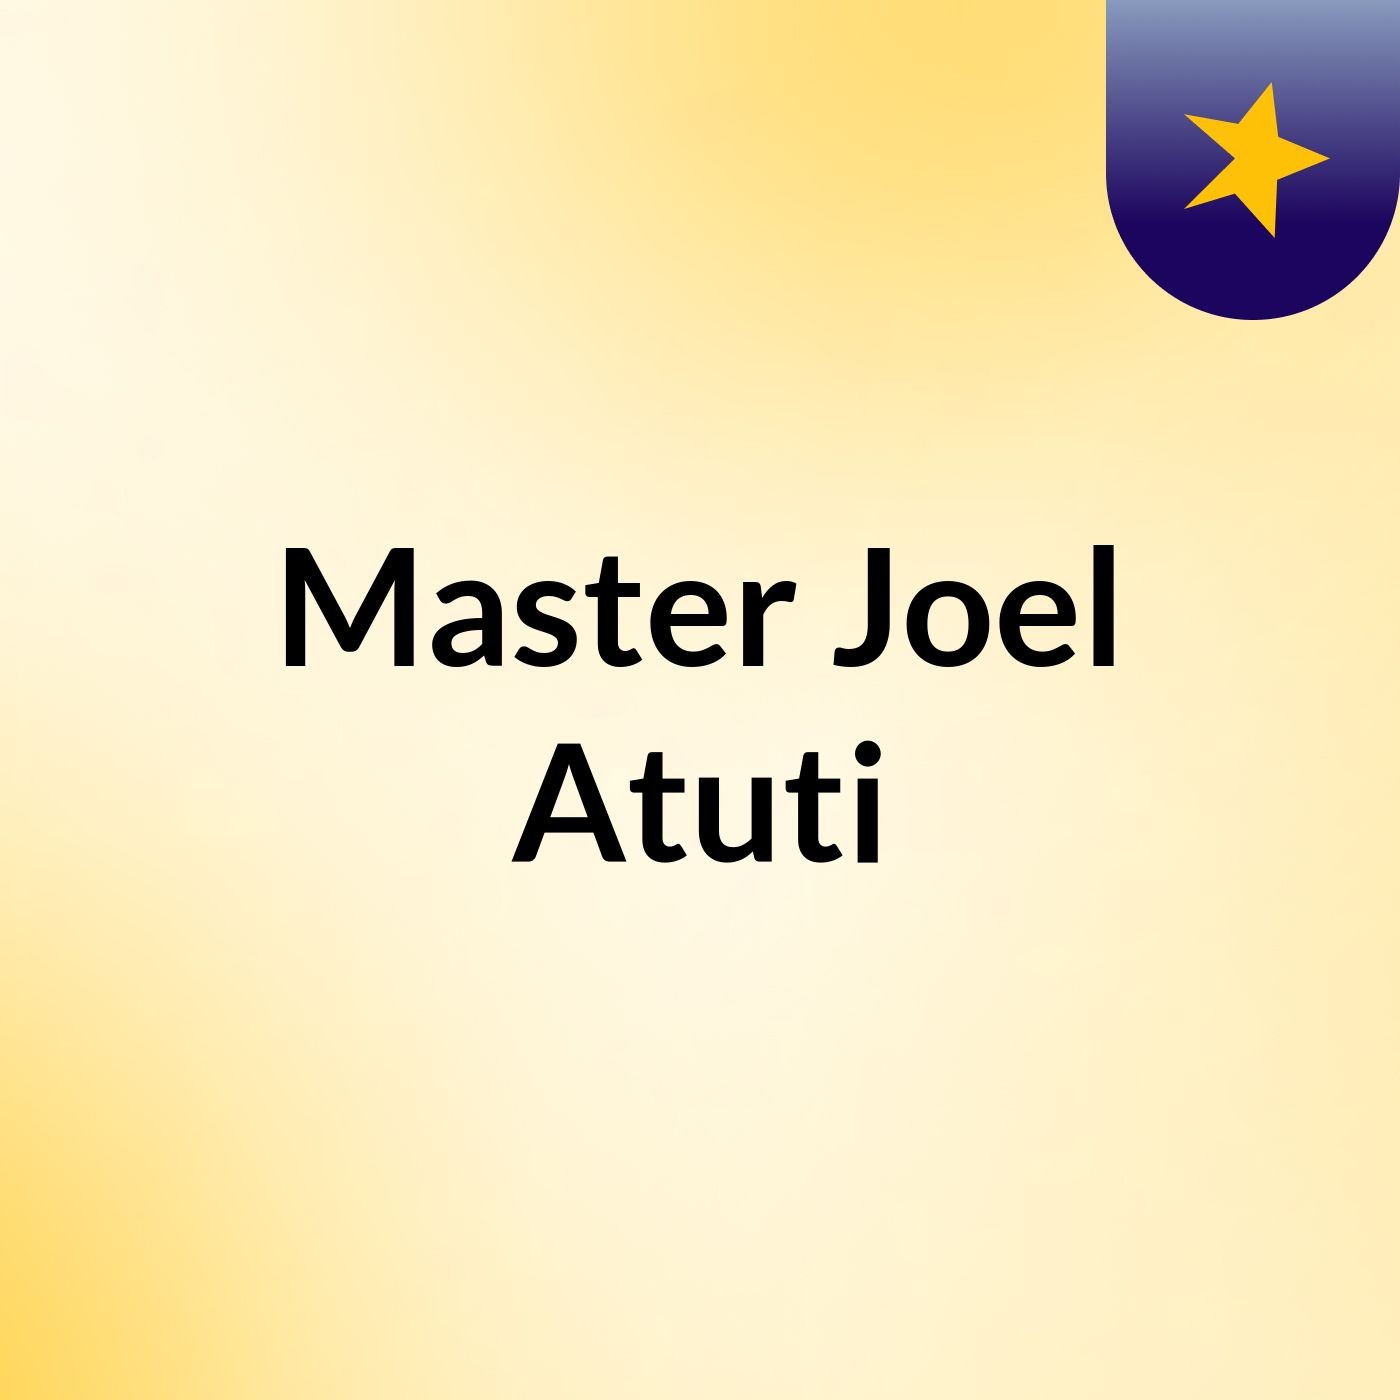 Master Joel Atuti